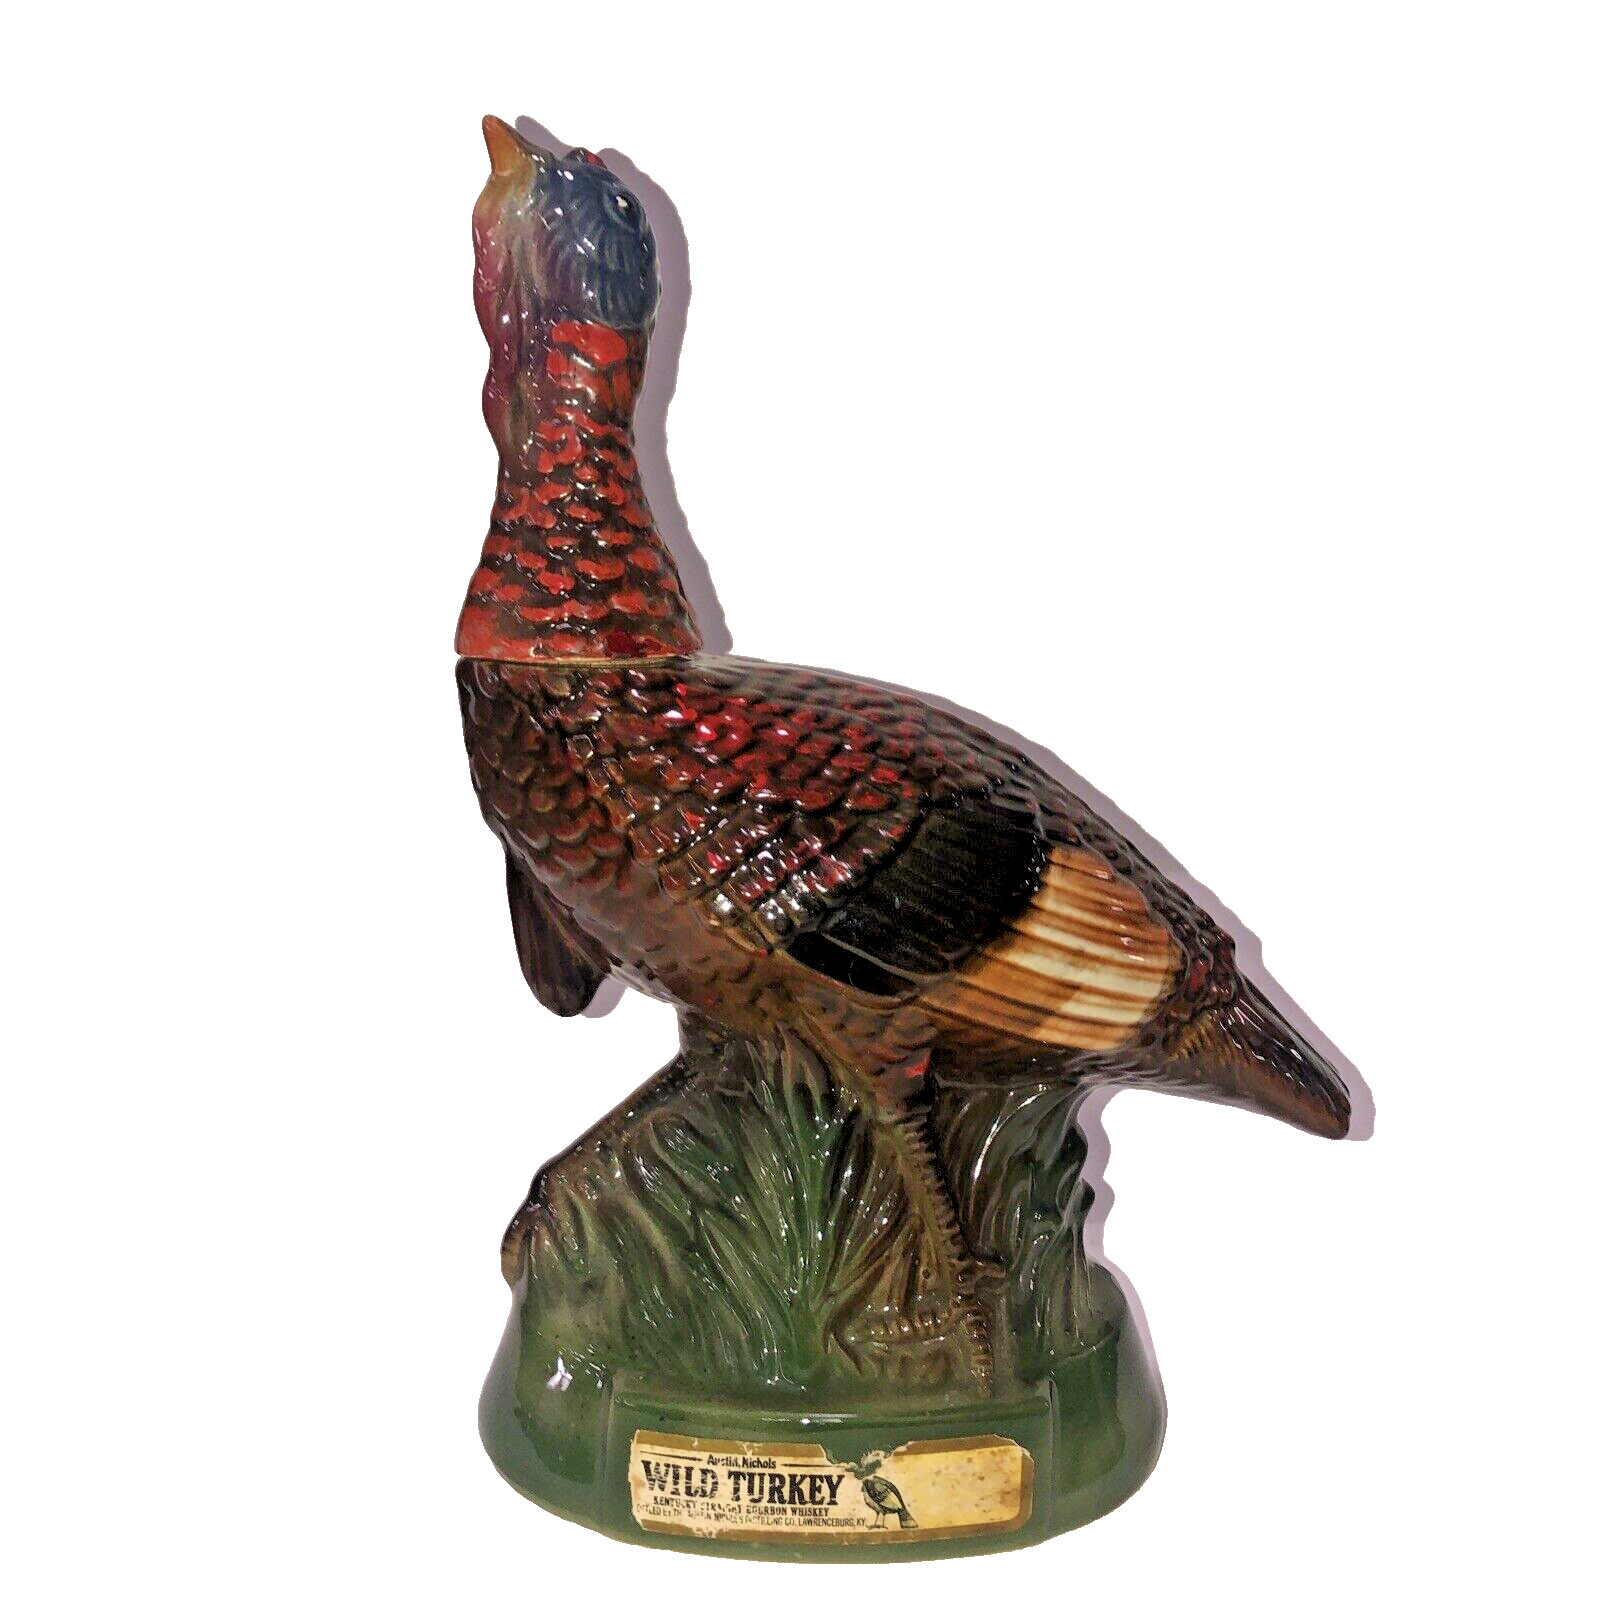 Wild Turkey Austin Nichols Decanter Size 6 Limited Edition 1976